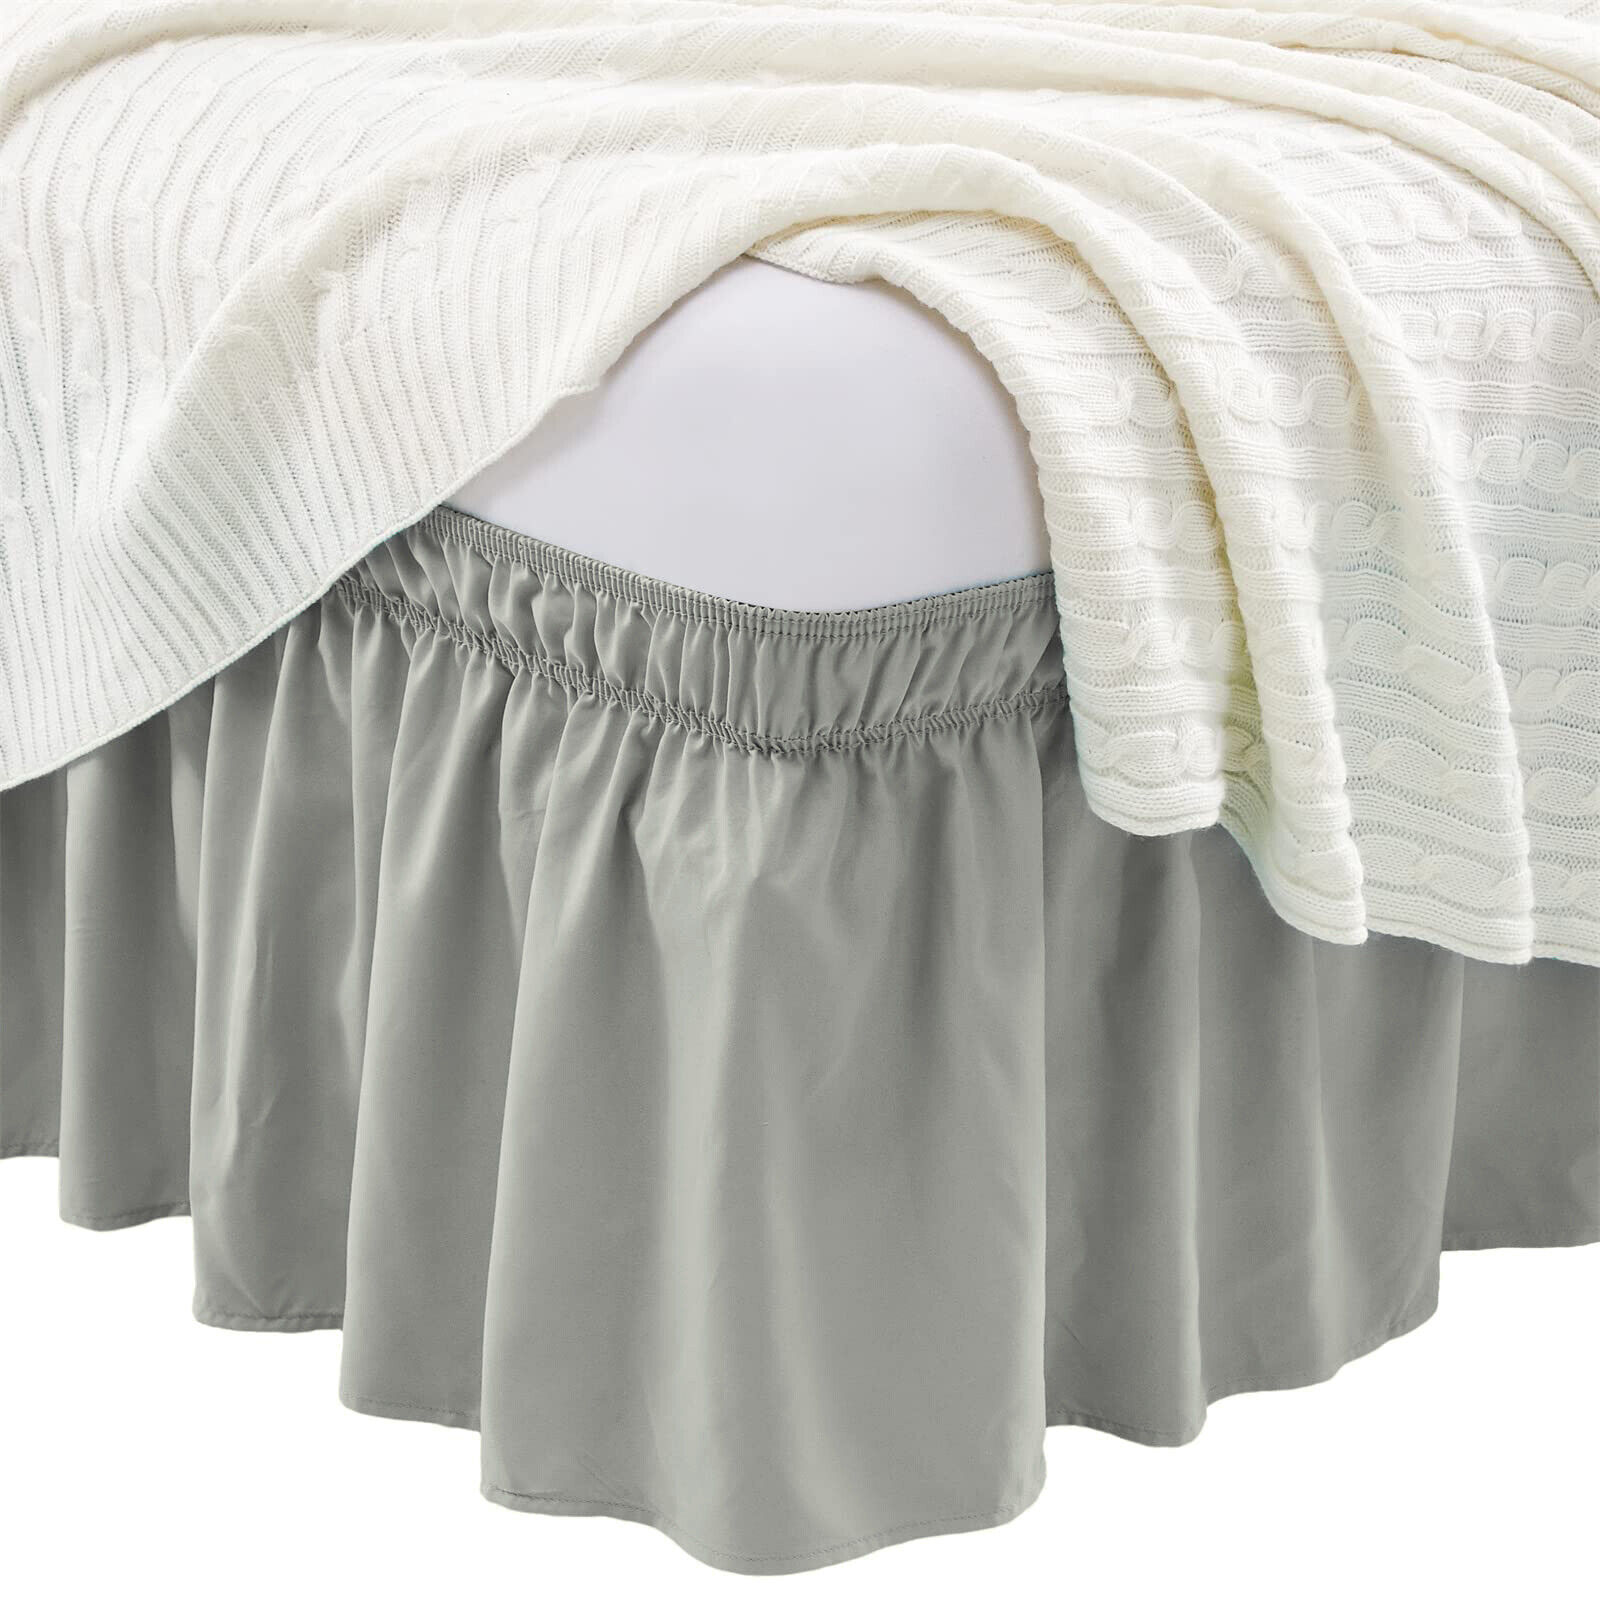 Elastic Bed Ruffle Skirt Elastic Elegant Wrap Ruffle Around Bed with 15inch Drop